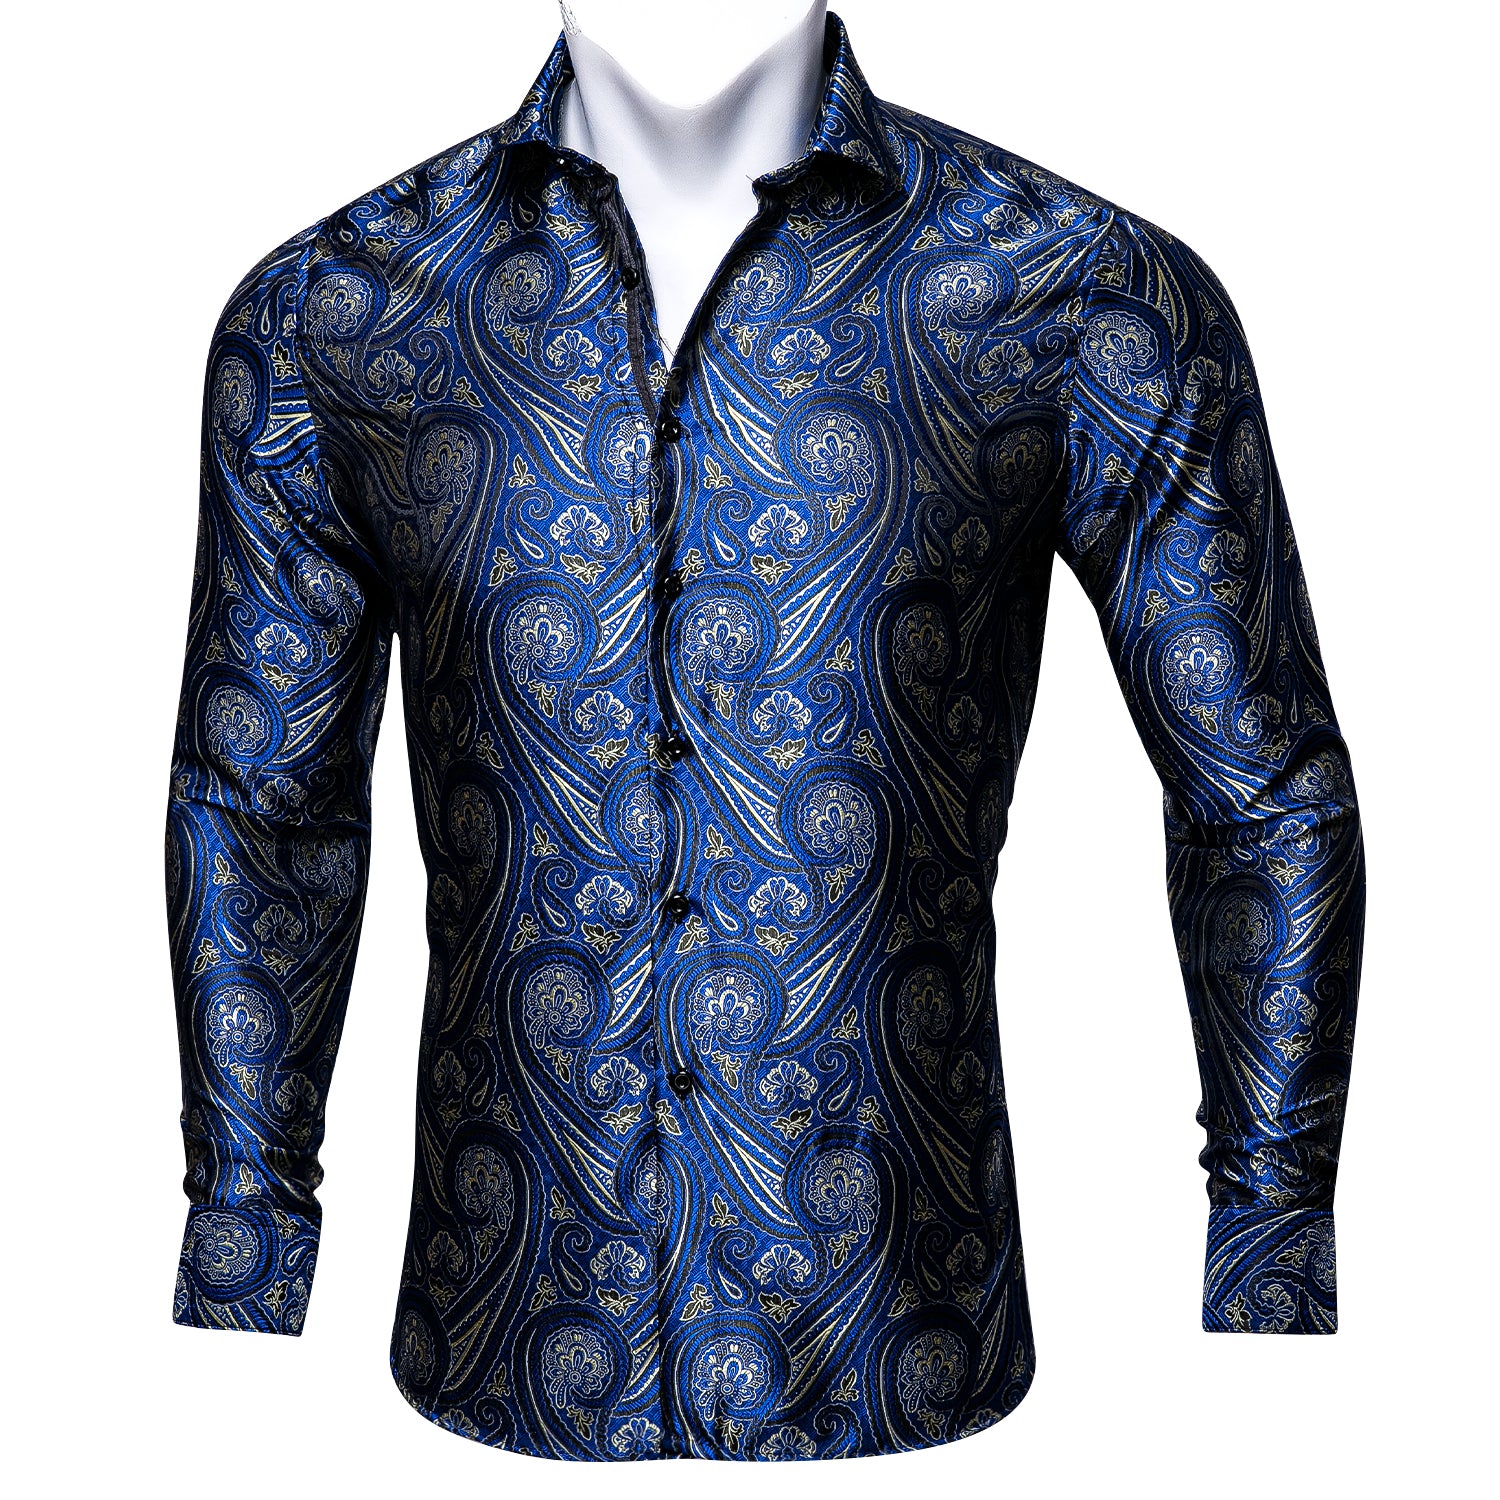 Barry.wang Plus Size Blue Silk Paisley Tribal Long Sleeve Men's Shirt